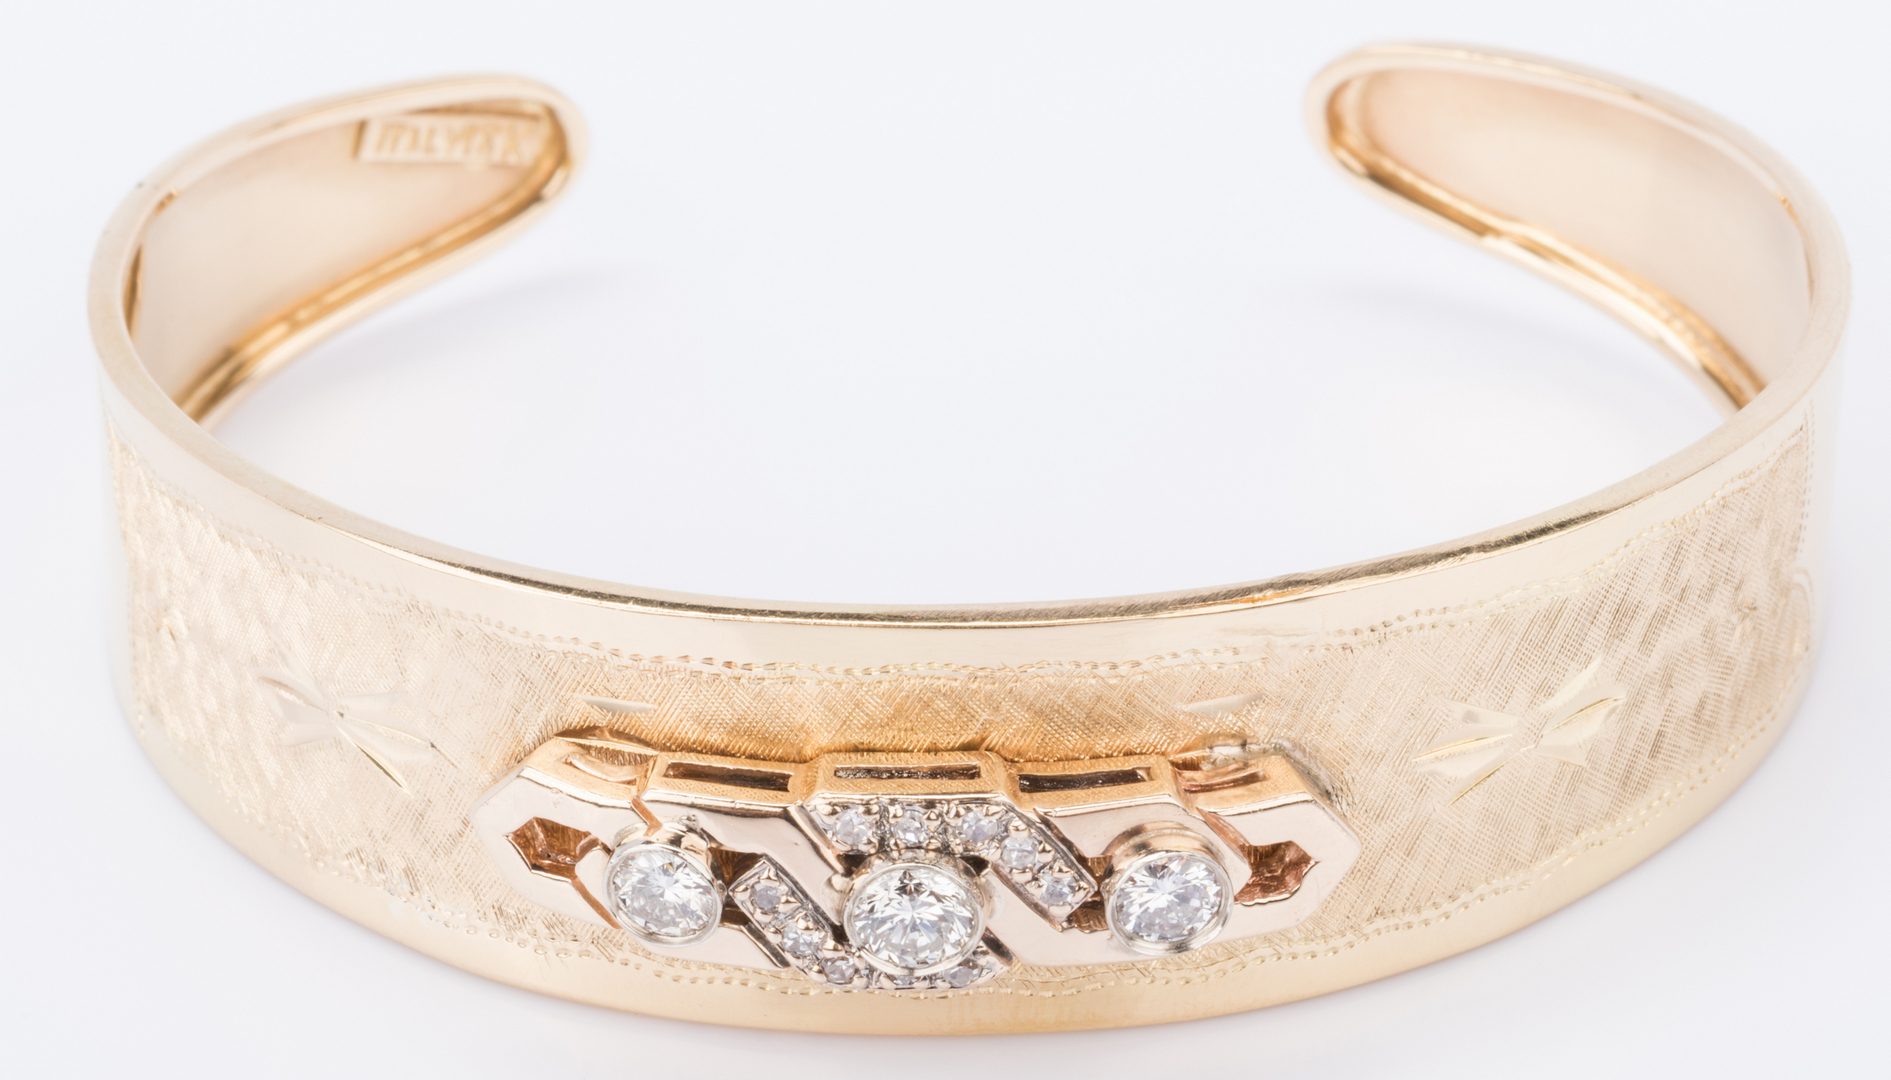 Lot 380: 18K Italian Diamond Cuff Bracelet